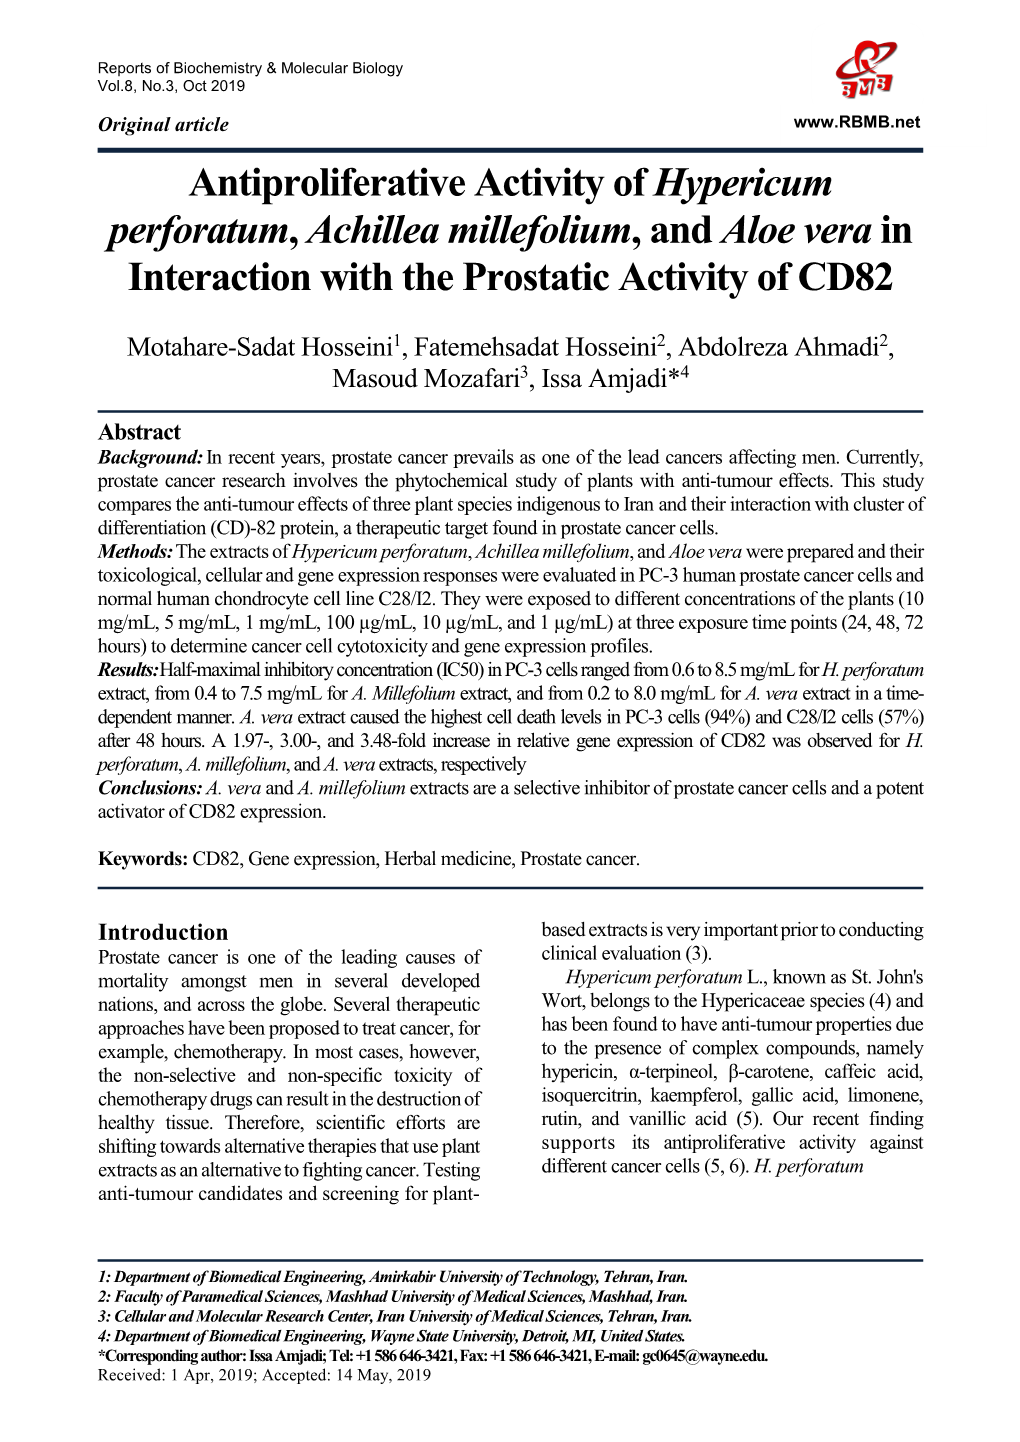 Antiproliferative Activity of Hypericum Perforatum, Achillea Millefolium, and Aloe Vera in Interaction with the Prostatic Activity of CD82